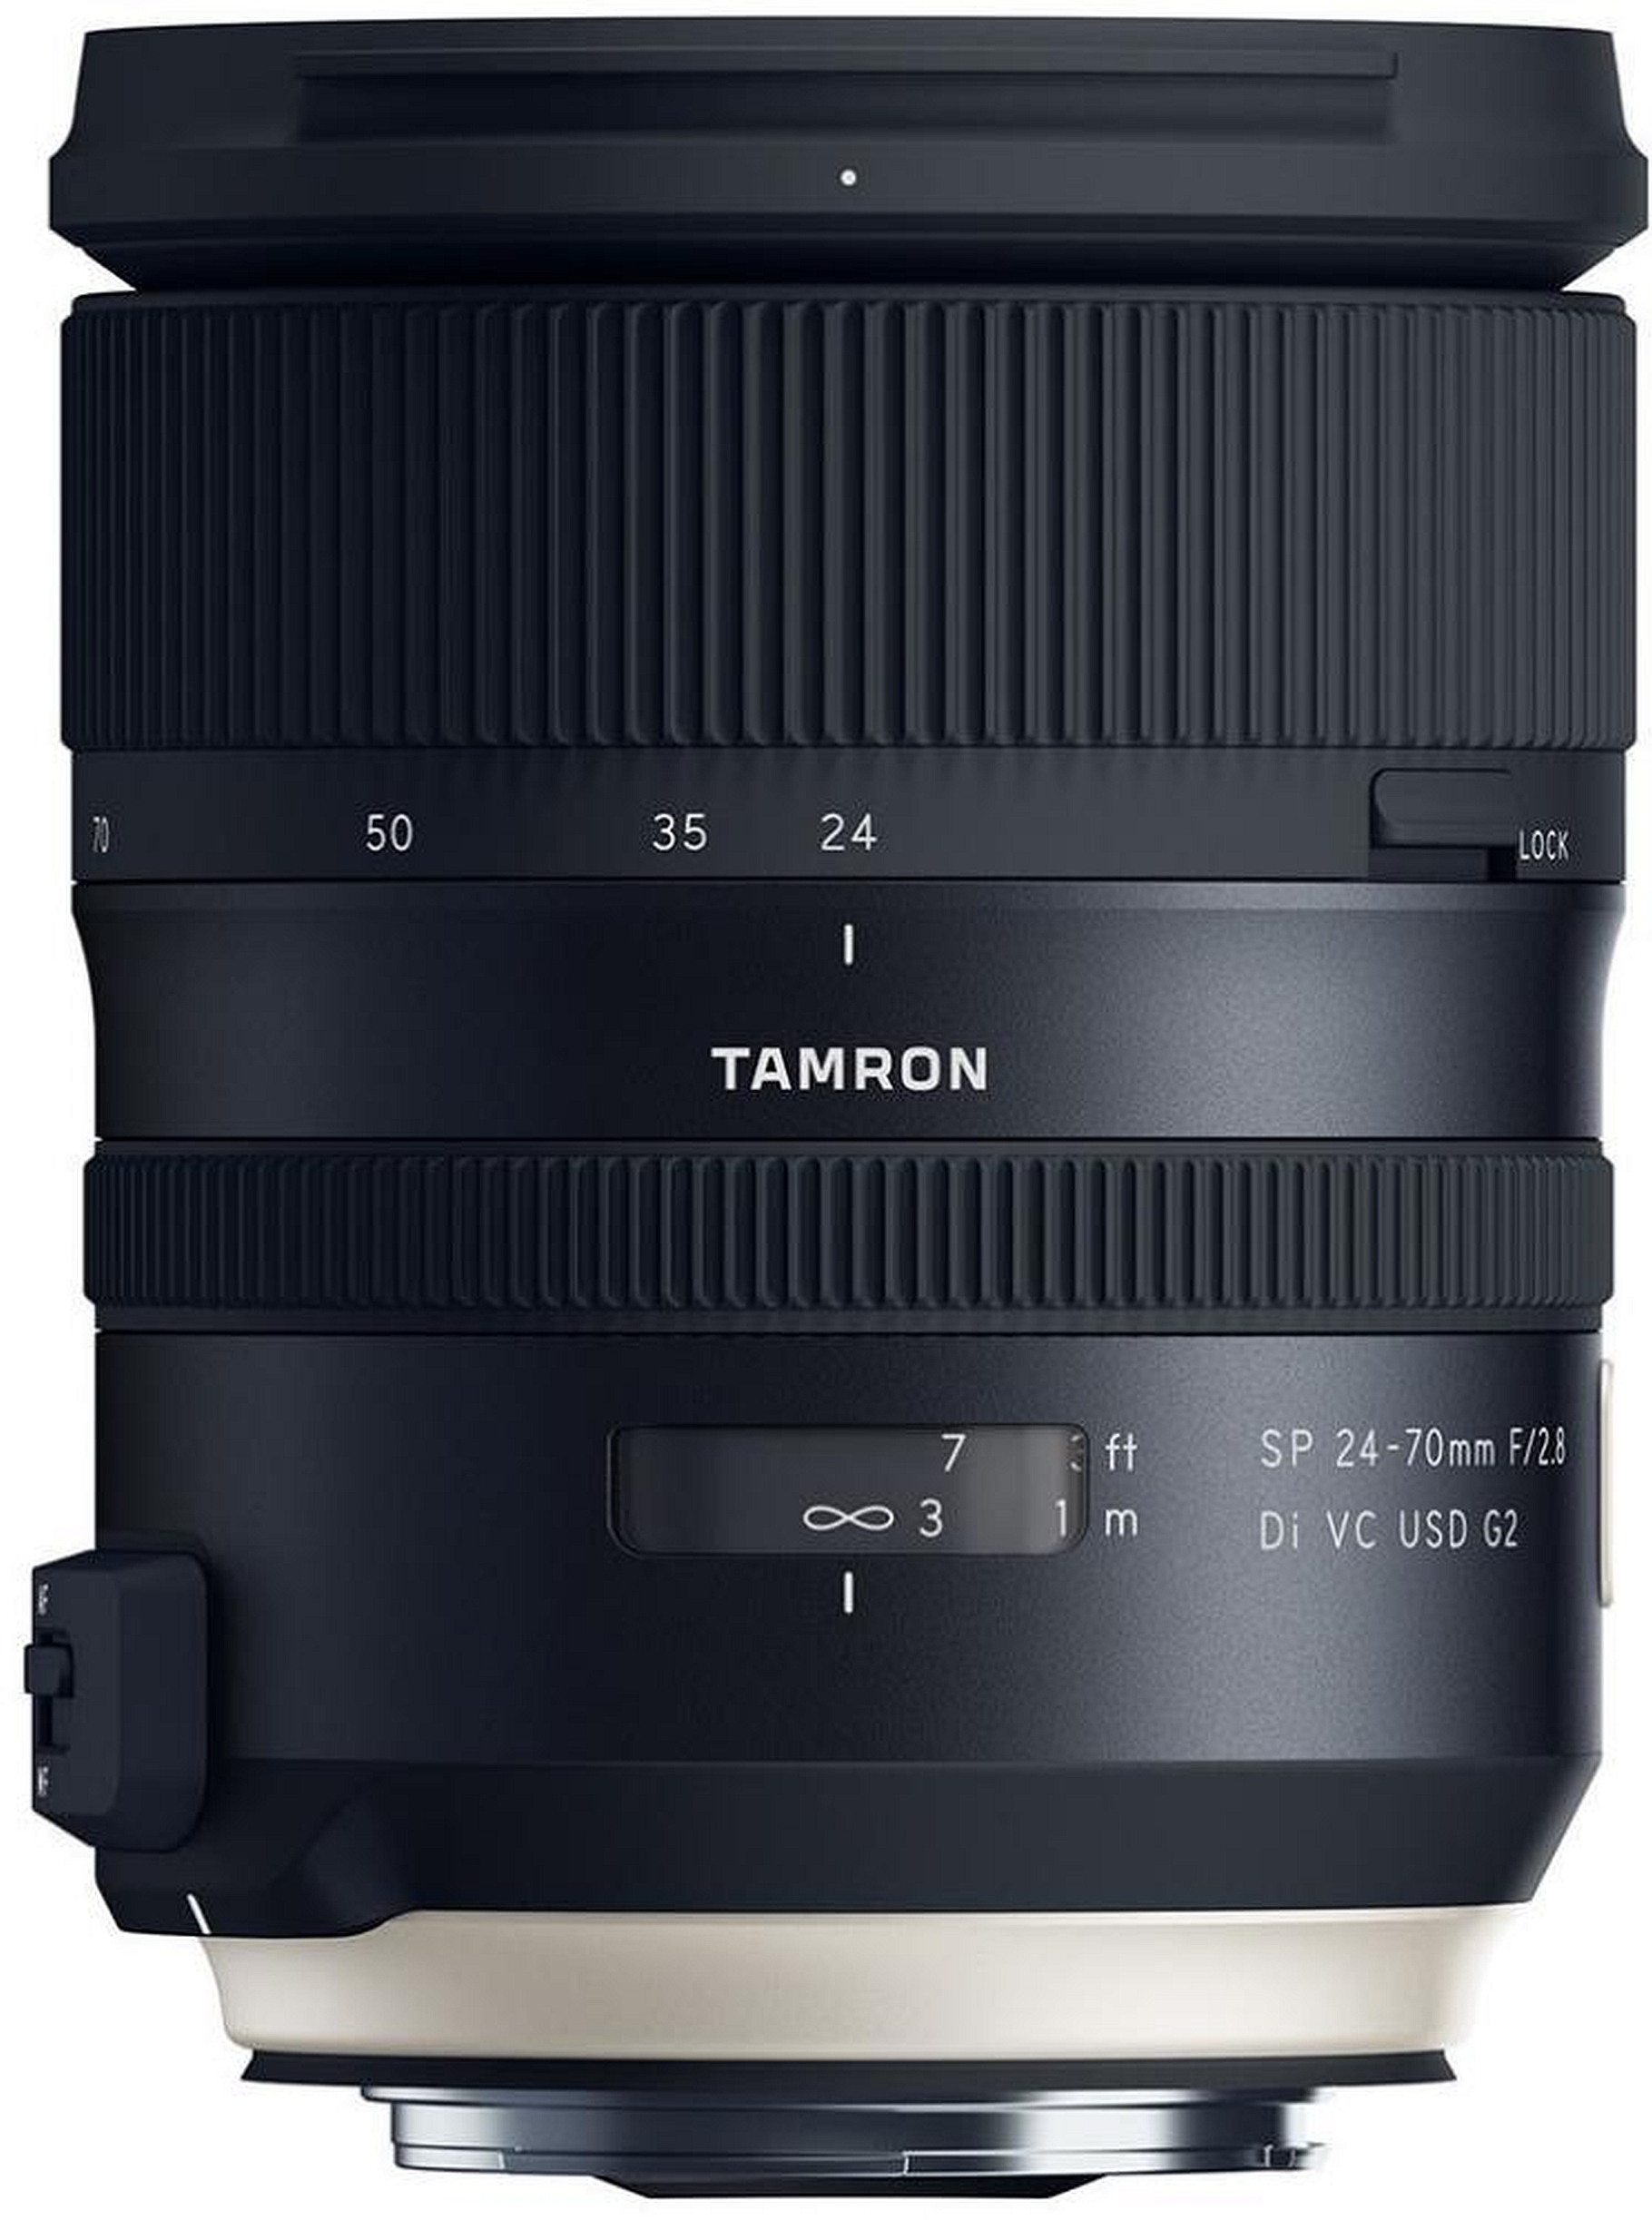 Tamron SP 24-70mm f2.8 Di VC USD G2 Nikon - Foto Erhardt